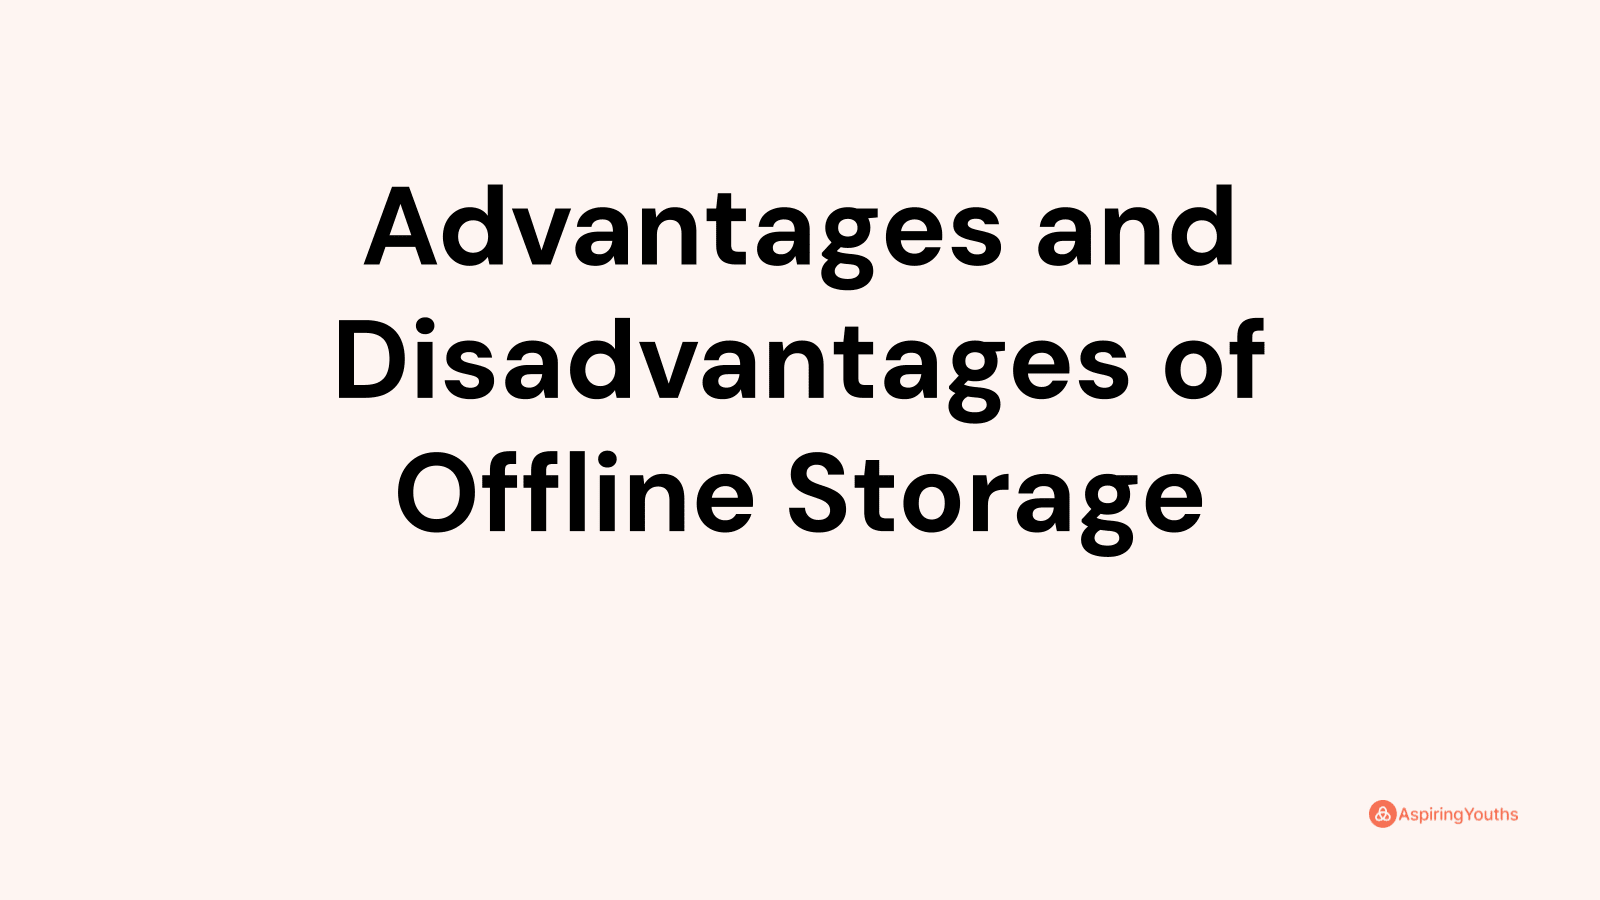 Advantages and disadvantages of Offline Storage